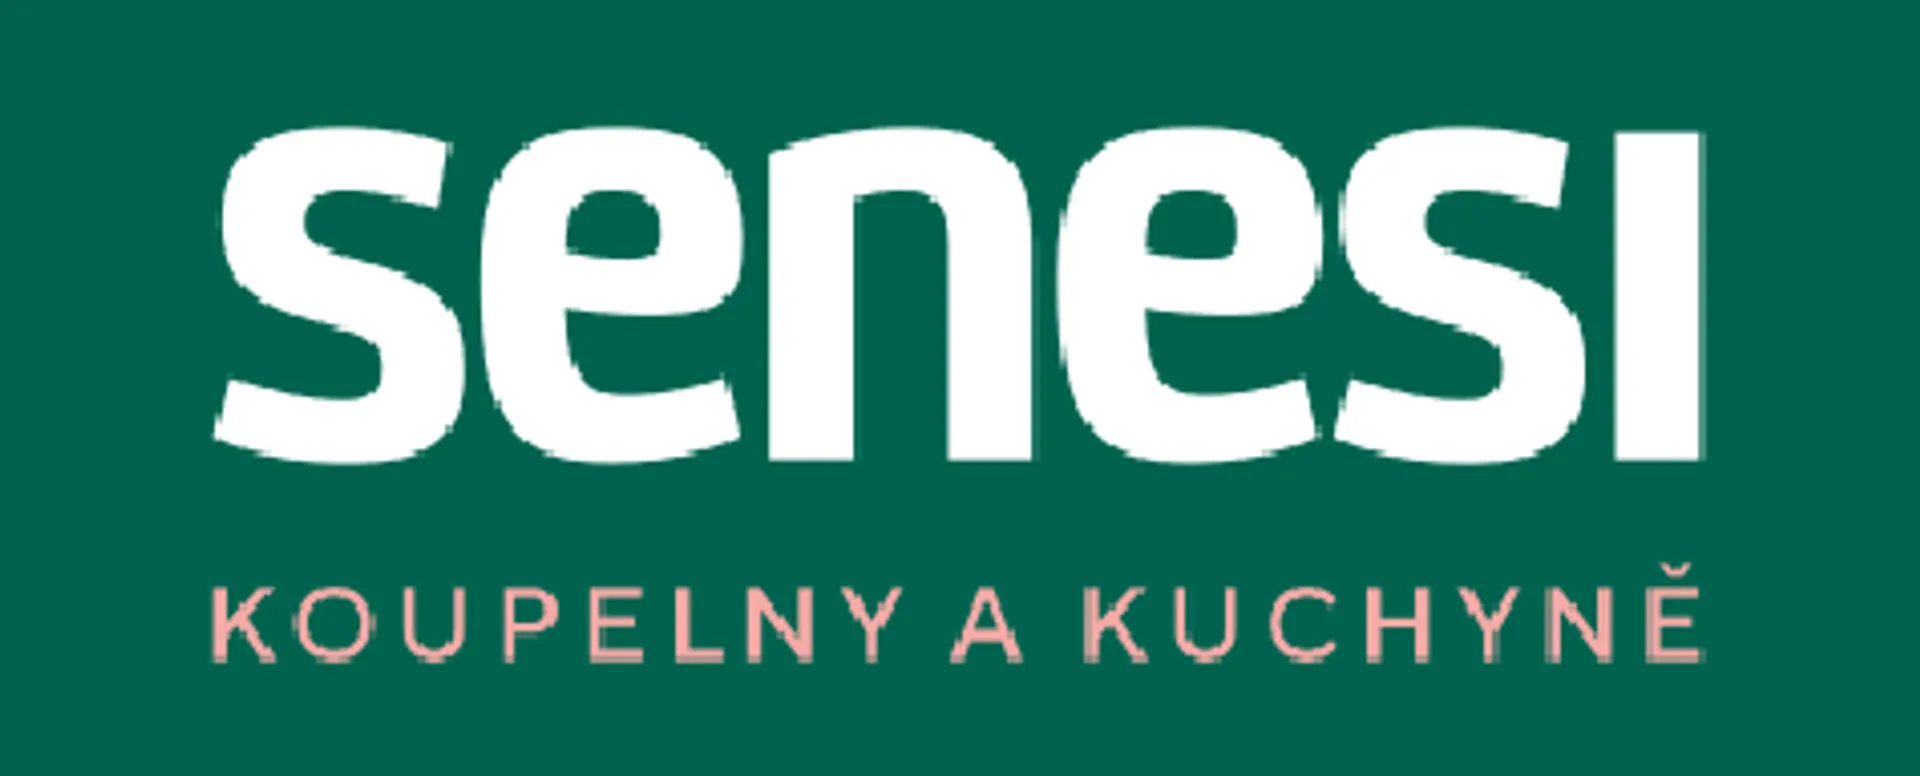 SENESI logo of current flyer